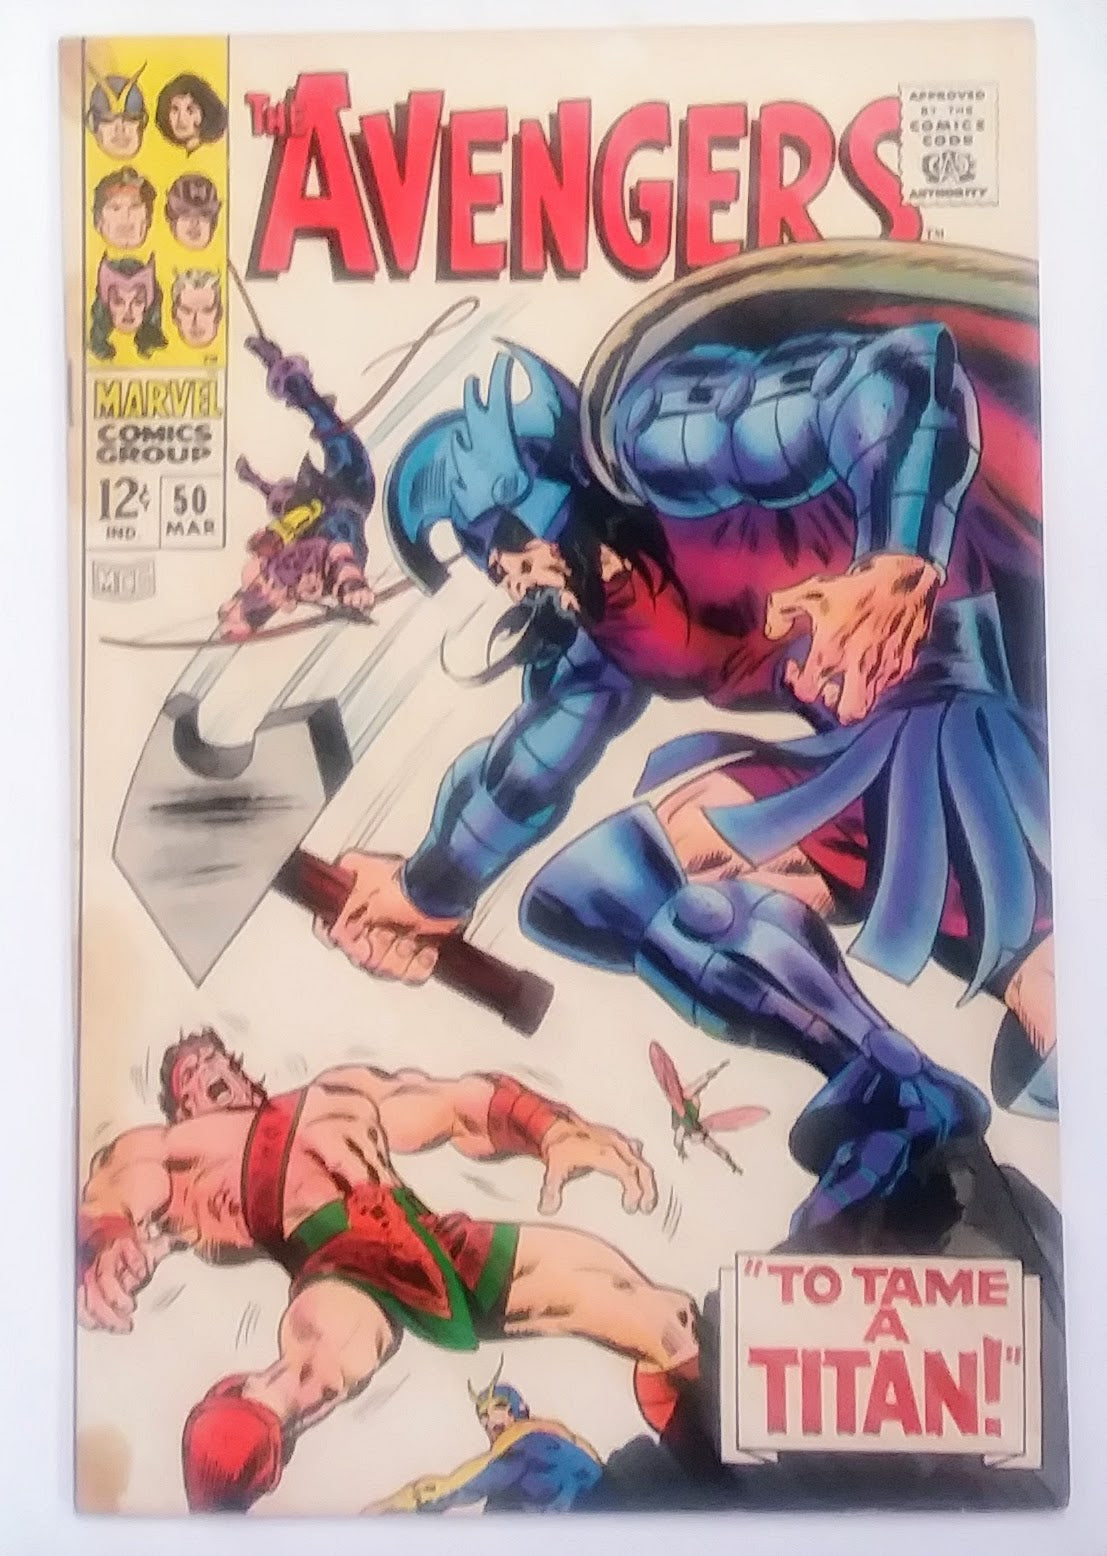 Avengers #050, Marvel Comics (March 1968)